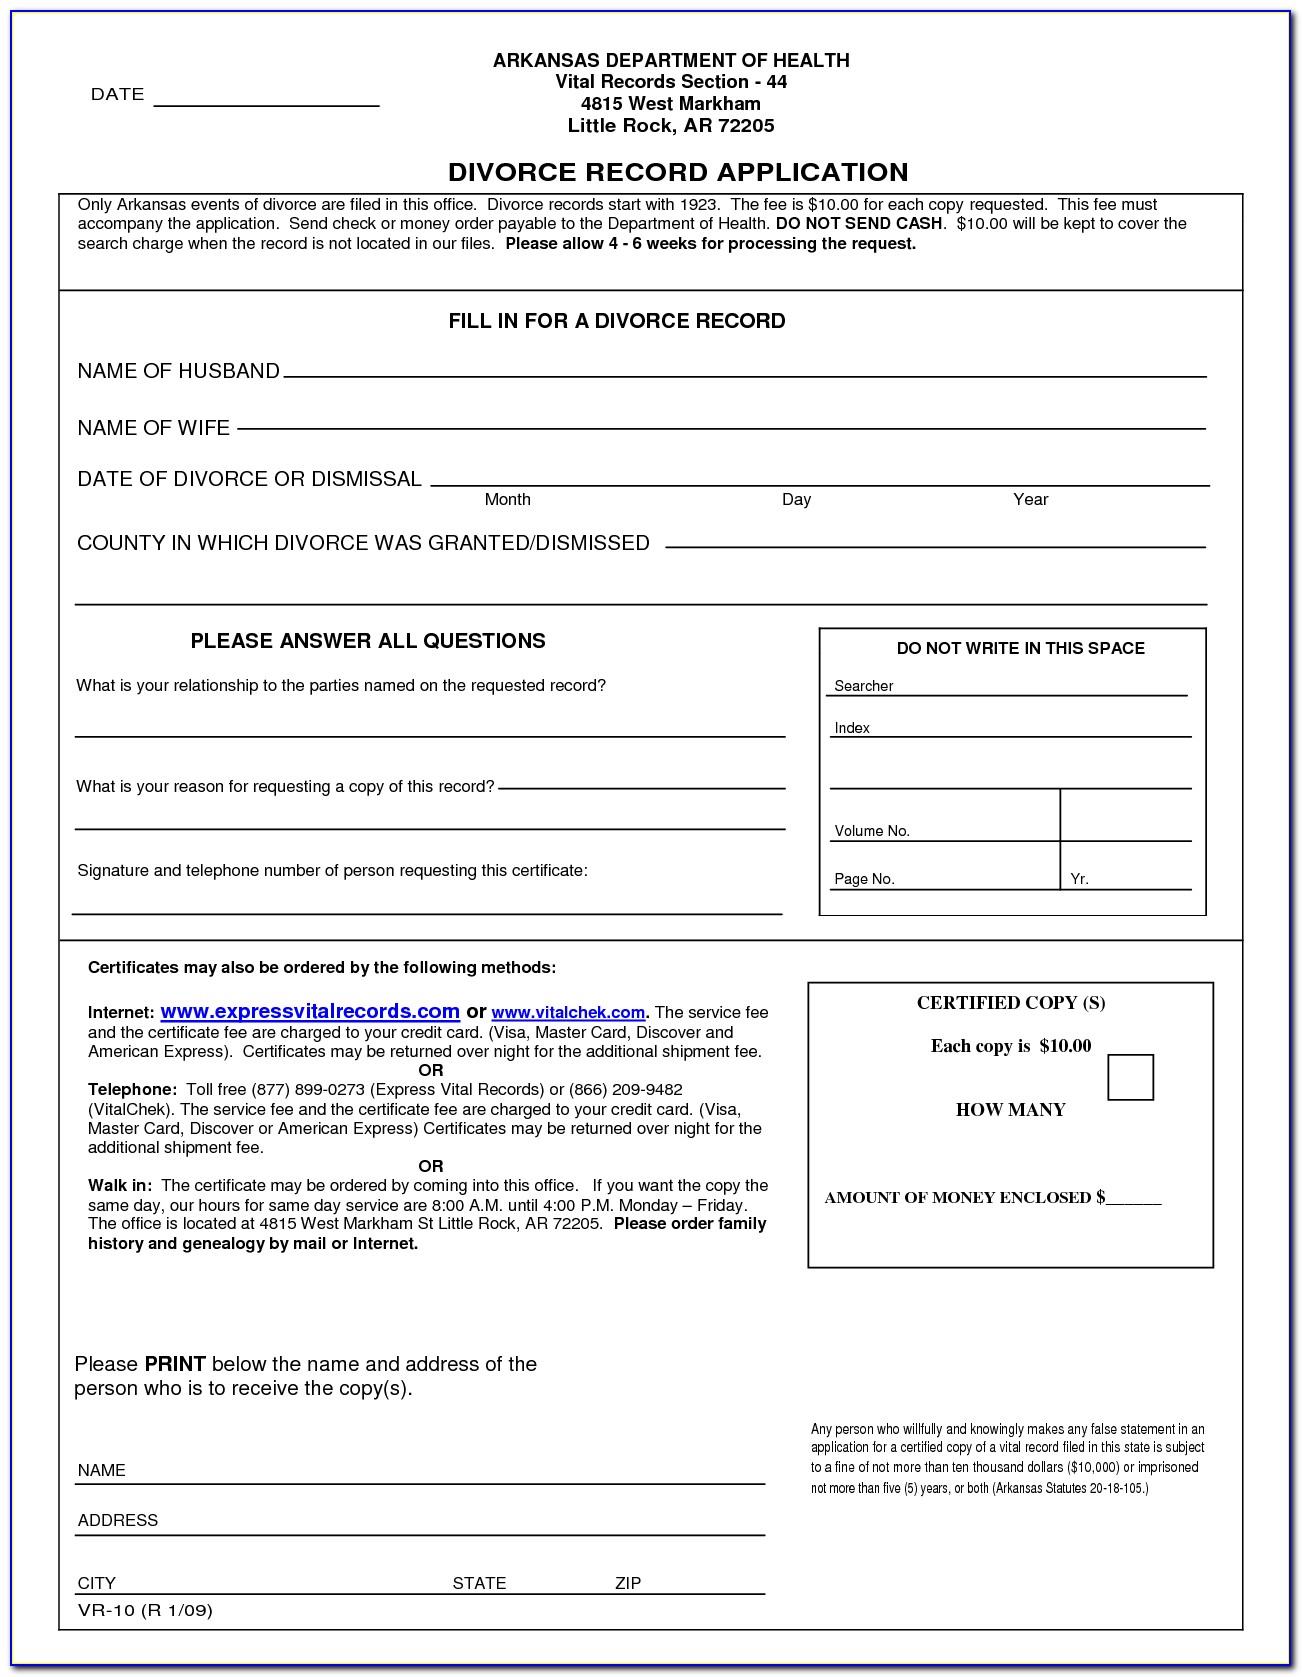 arkansas-complaint-for-divorce-form-pdf-form-resume-examples